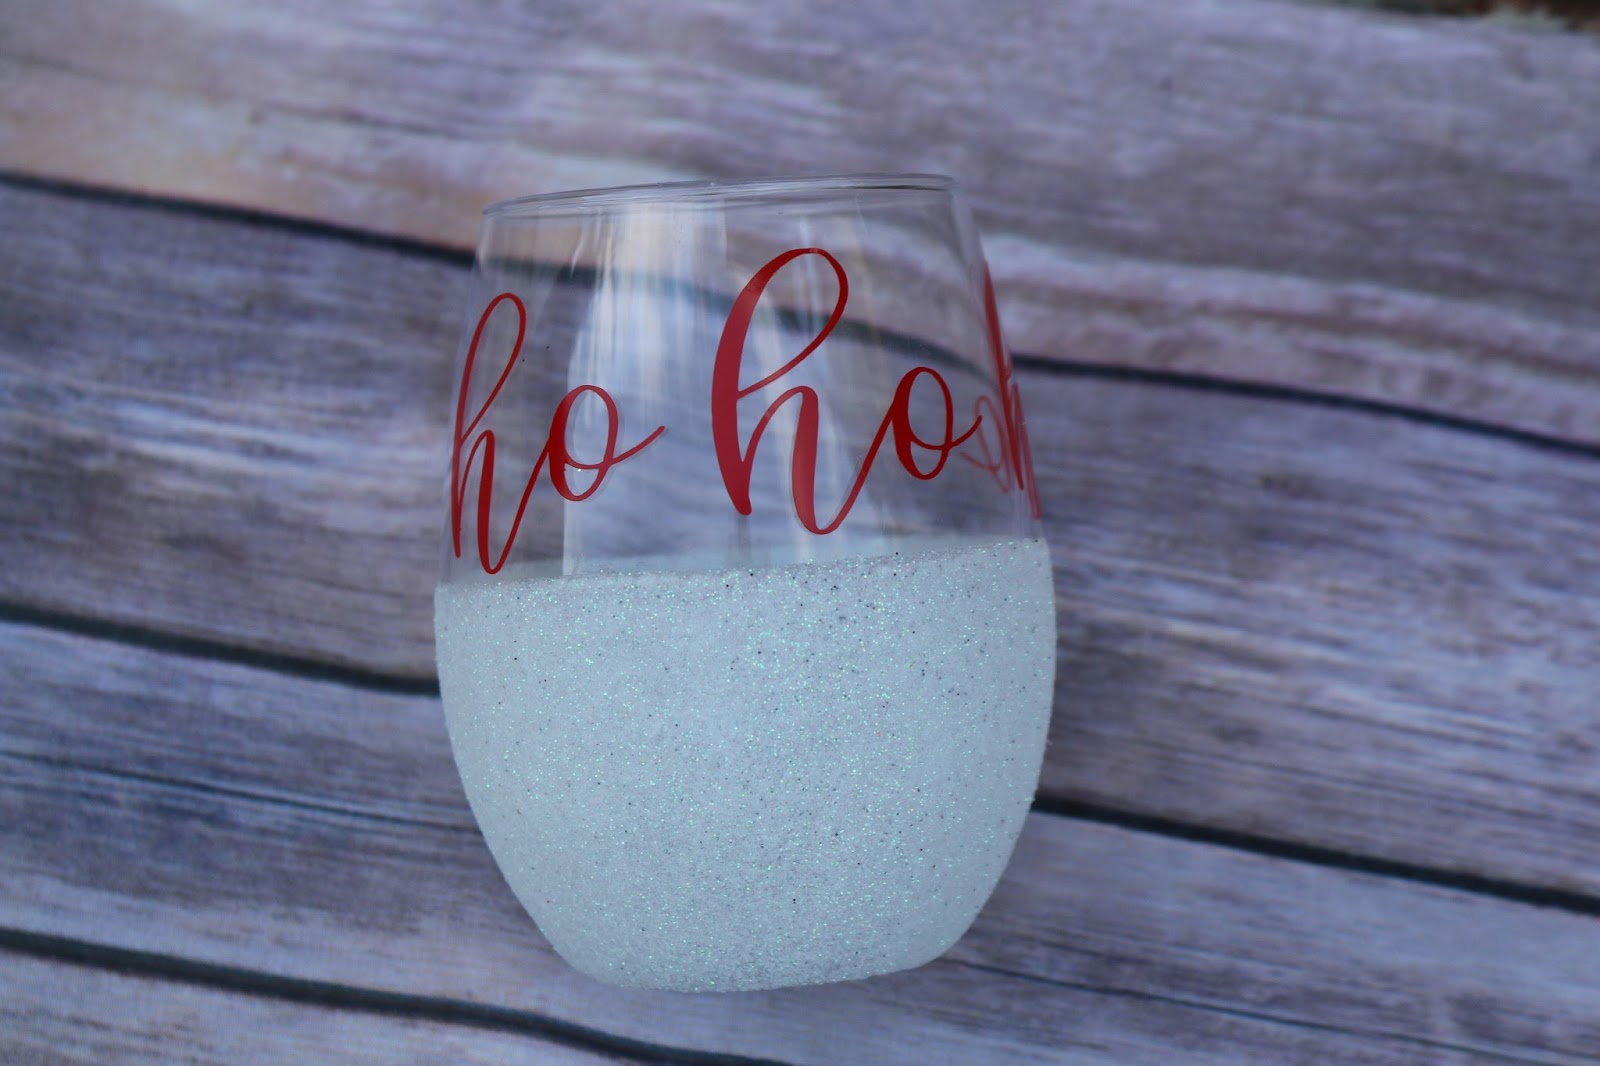 How to Glitter a Stemless Wine Glass - My Glittery Heart